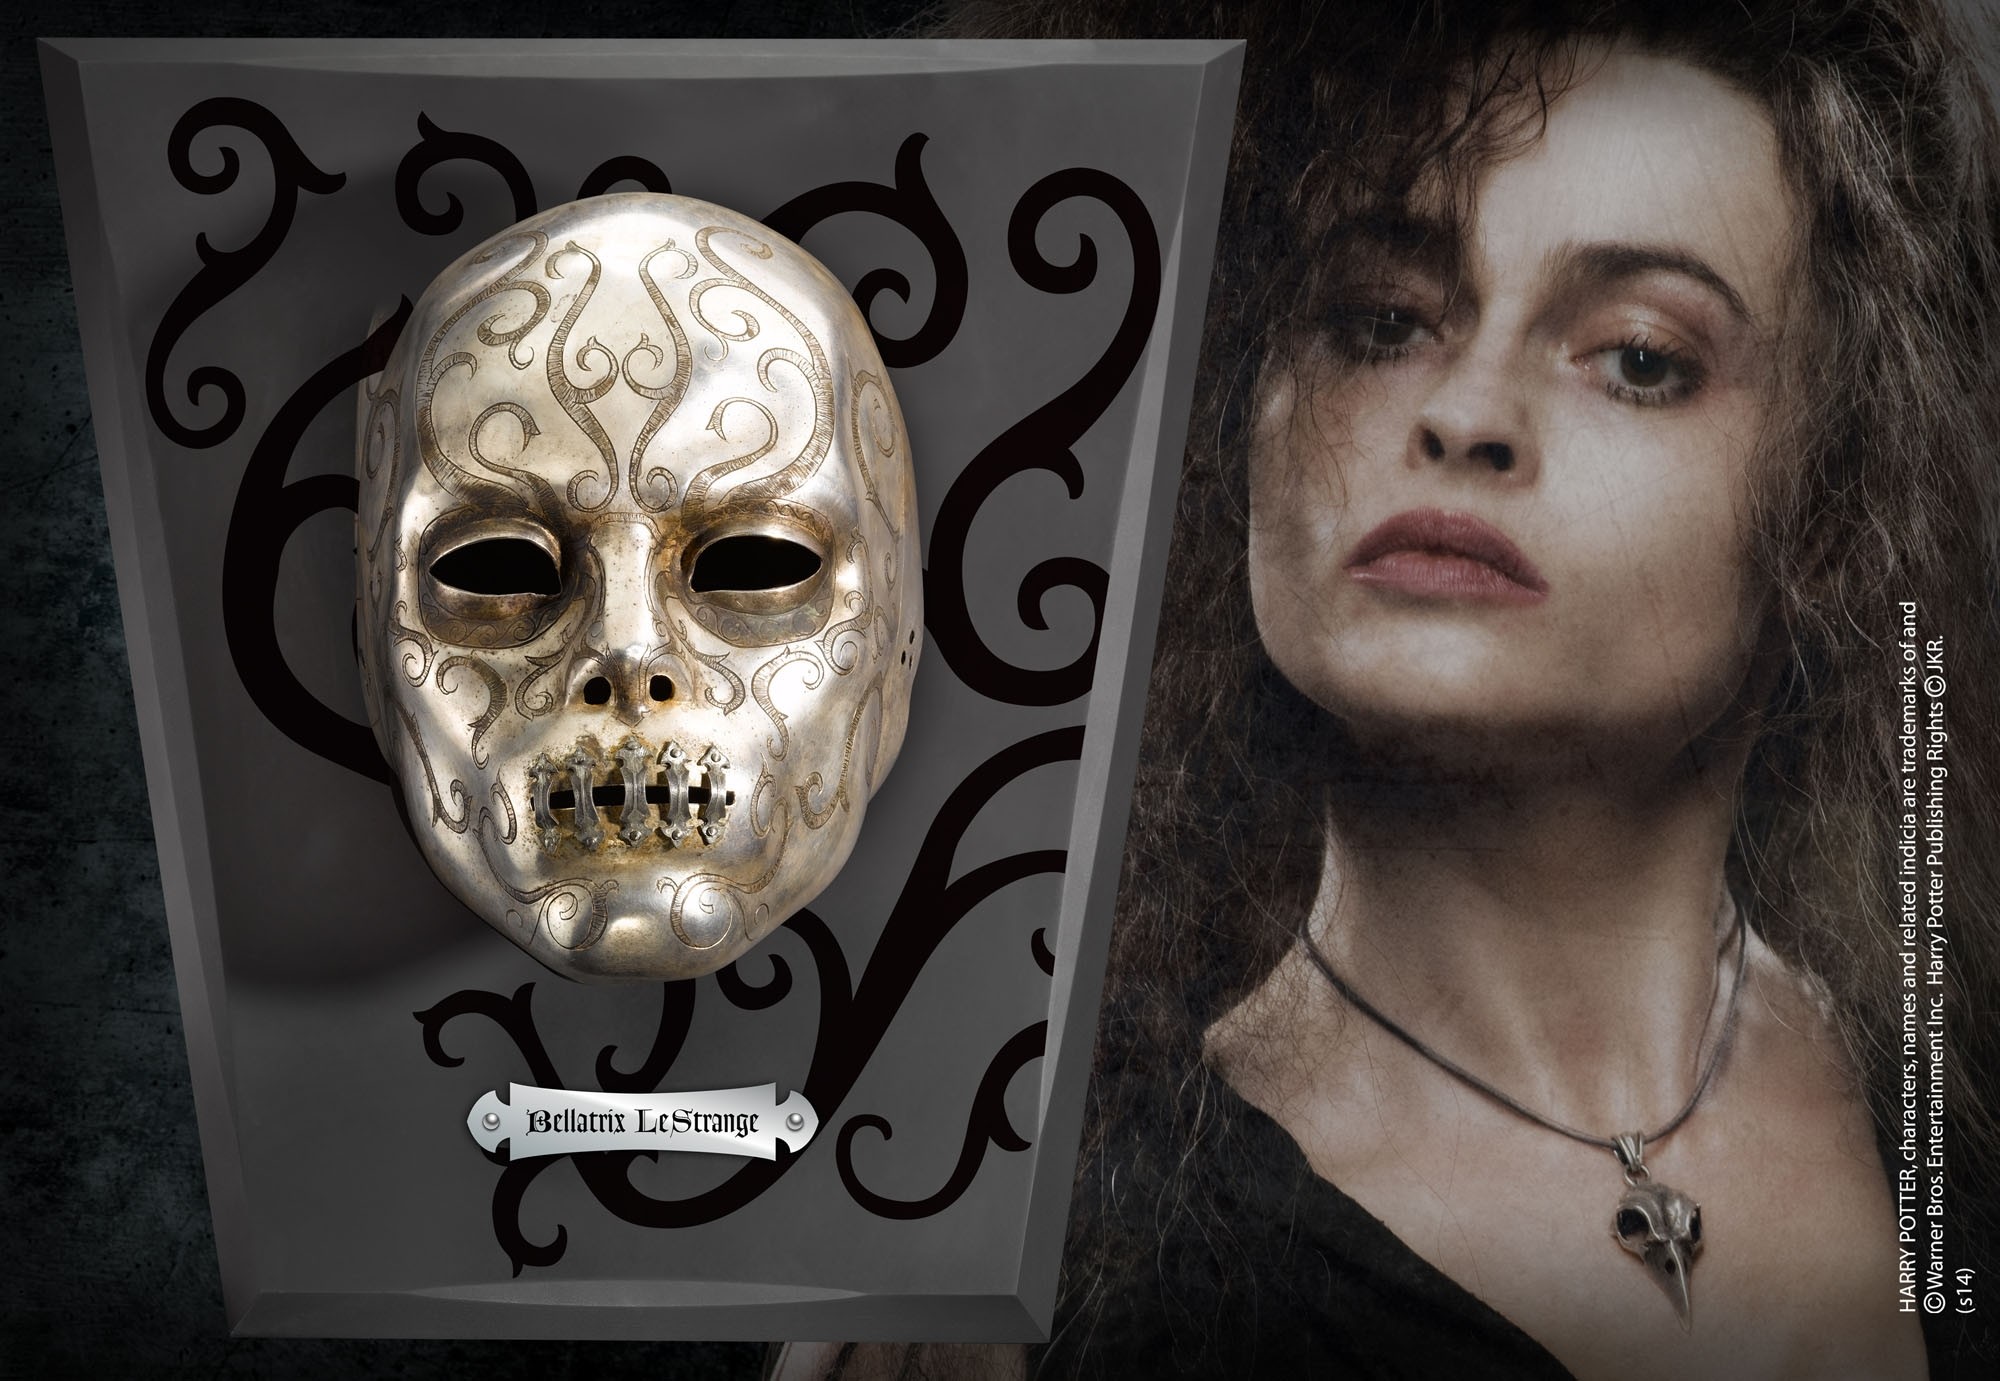 Bellatrix Death Eater Mask